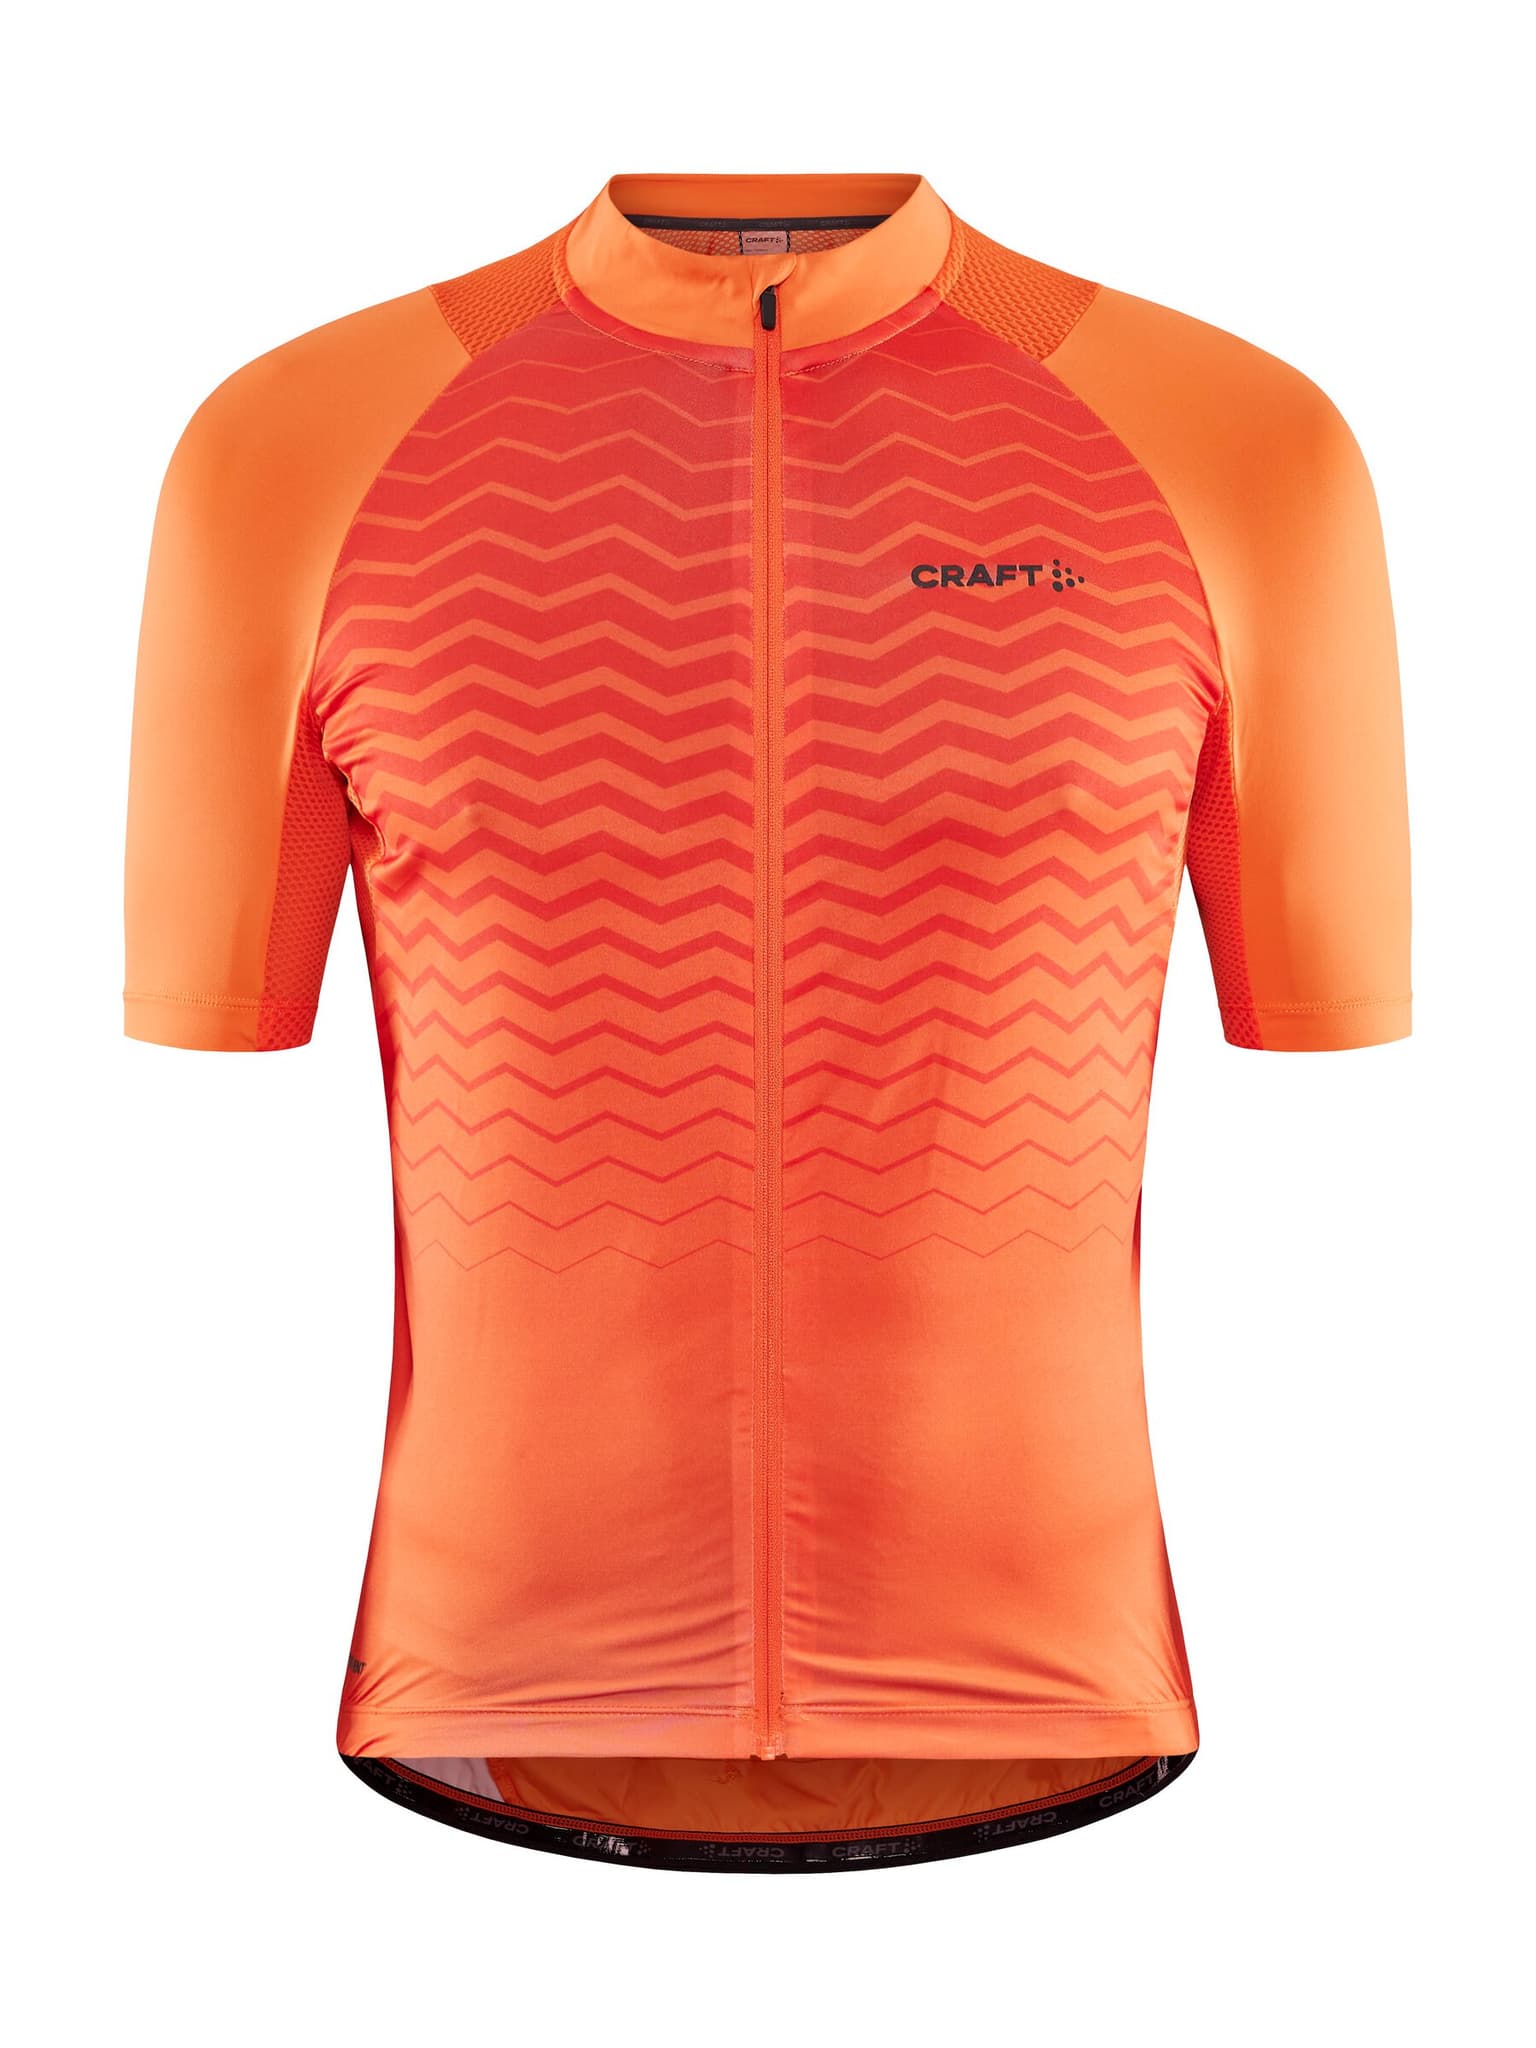 Craft Craft Adv Endur Jersey Maglietta da bici arancio 1